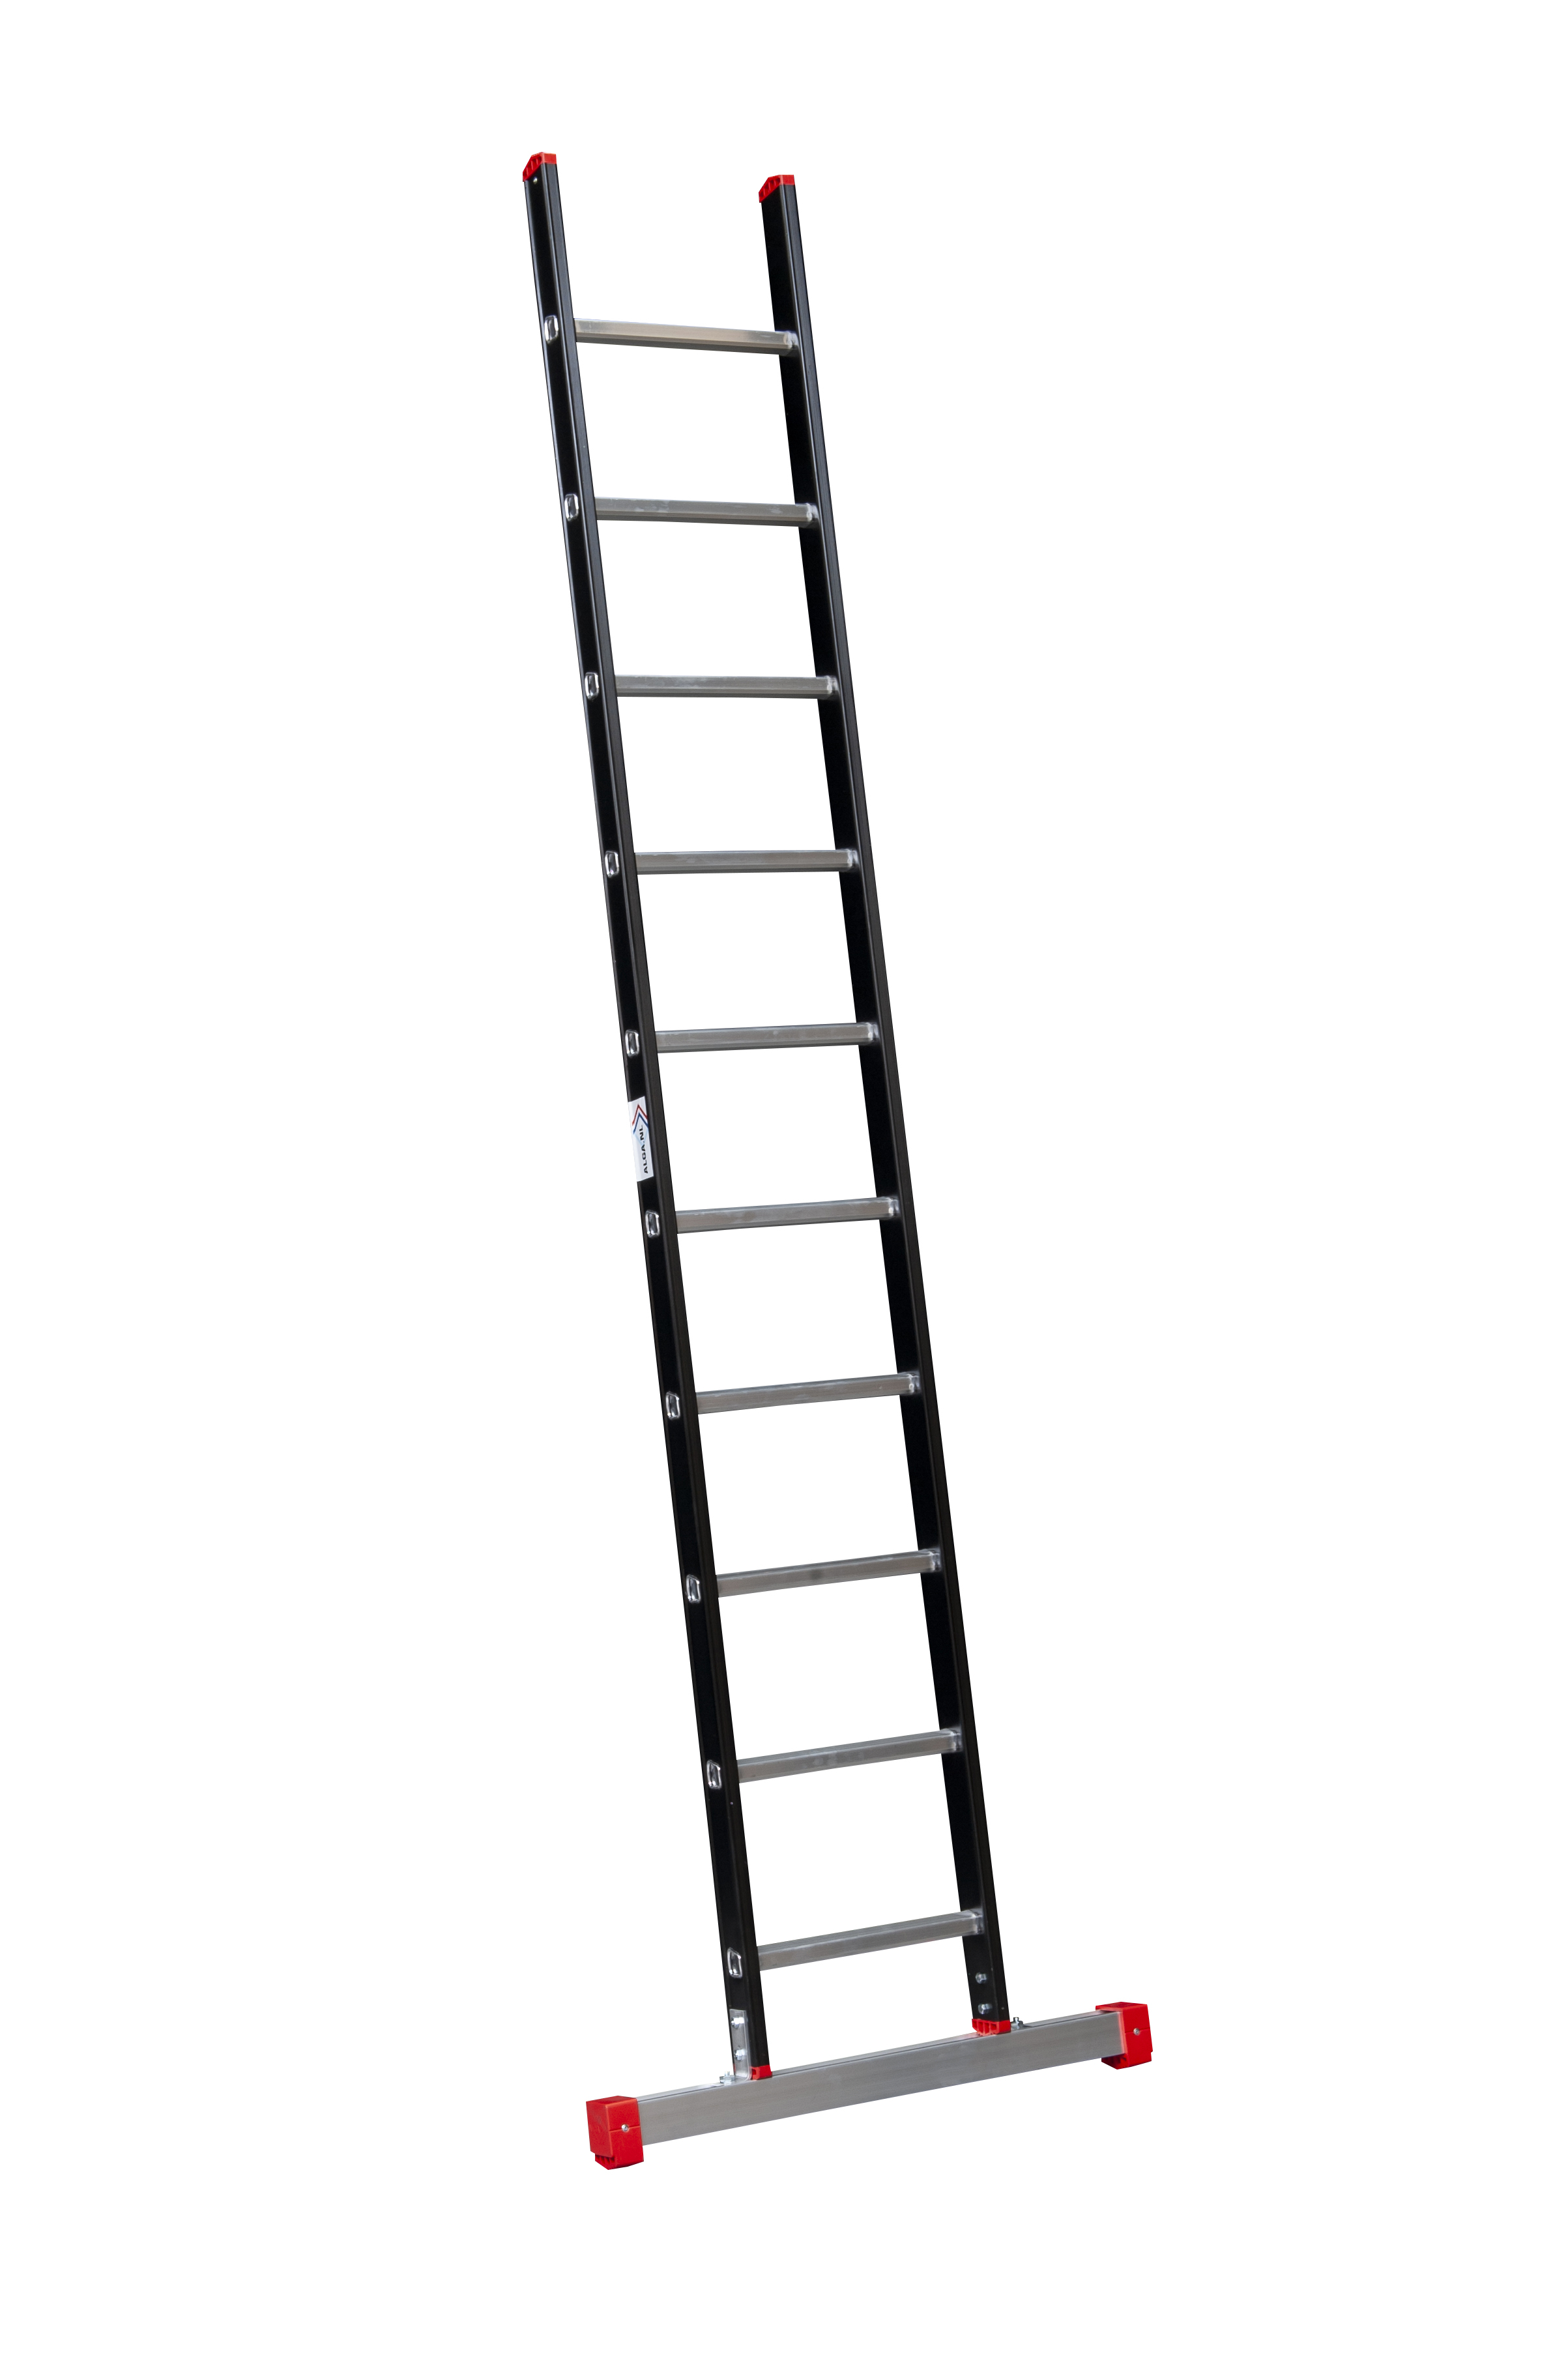 teller Inspectie kubus Enkele ladder 1x10 | aluminium ladder met stabilitietsbalk